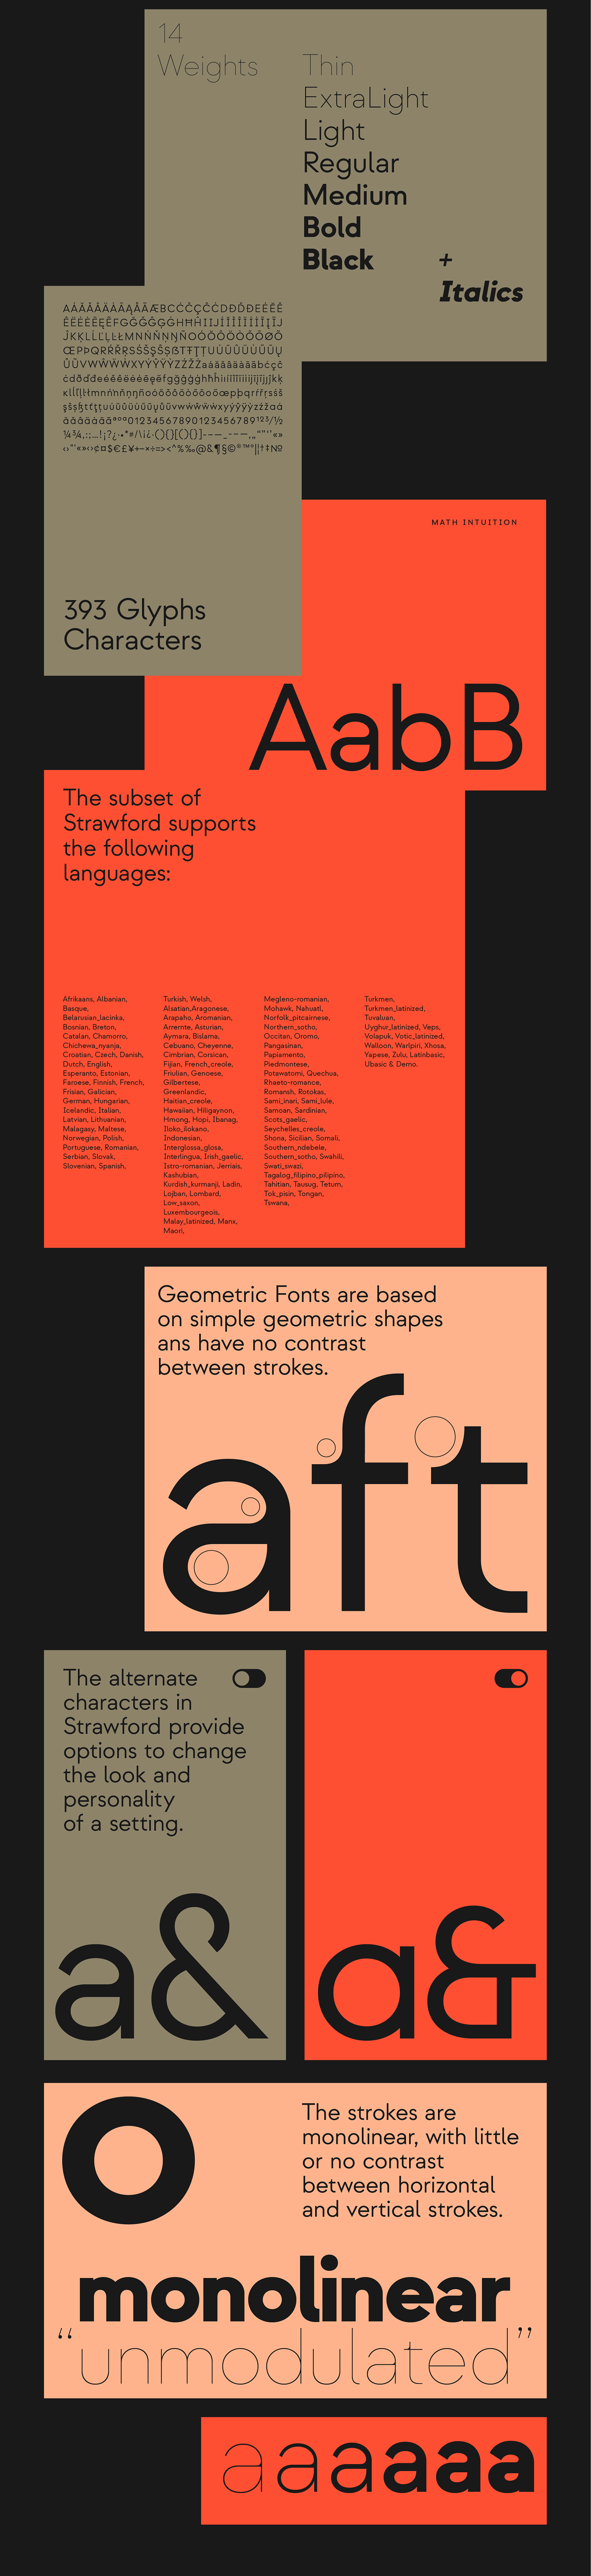 font free geometric Monolinear sans serif Typeface